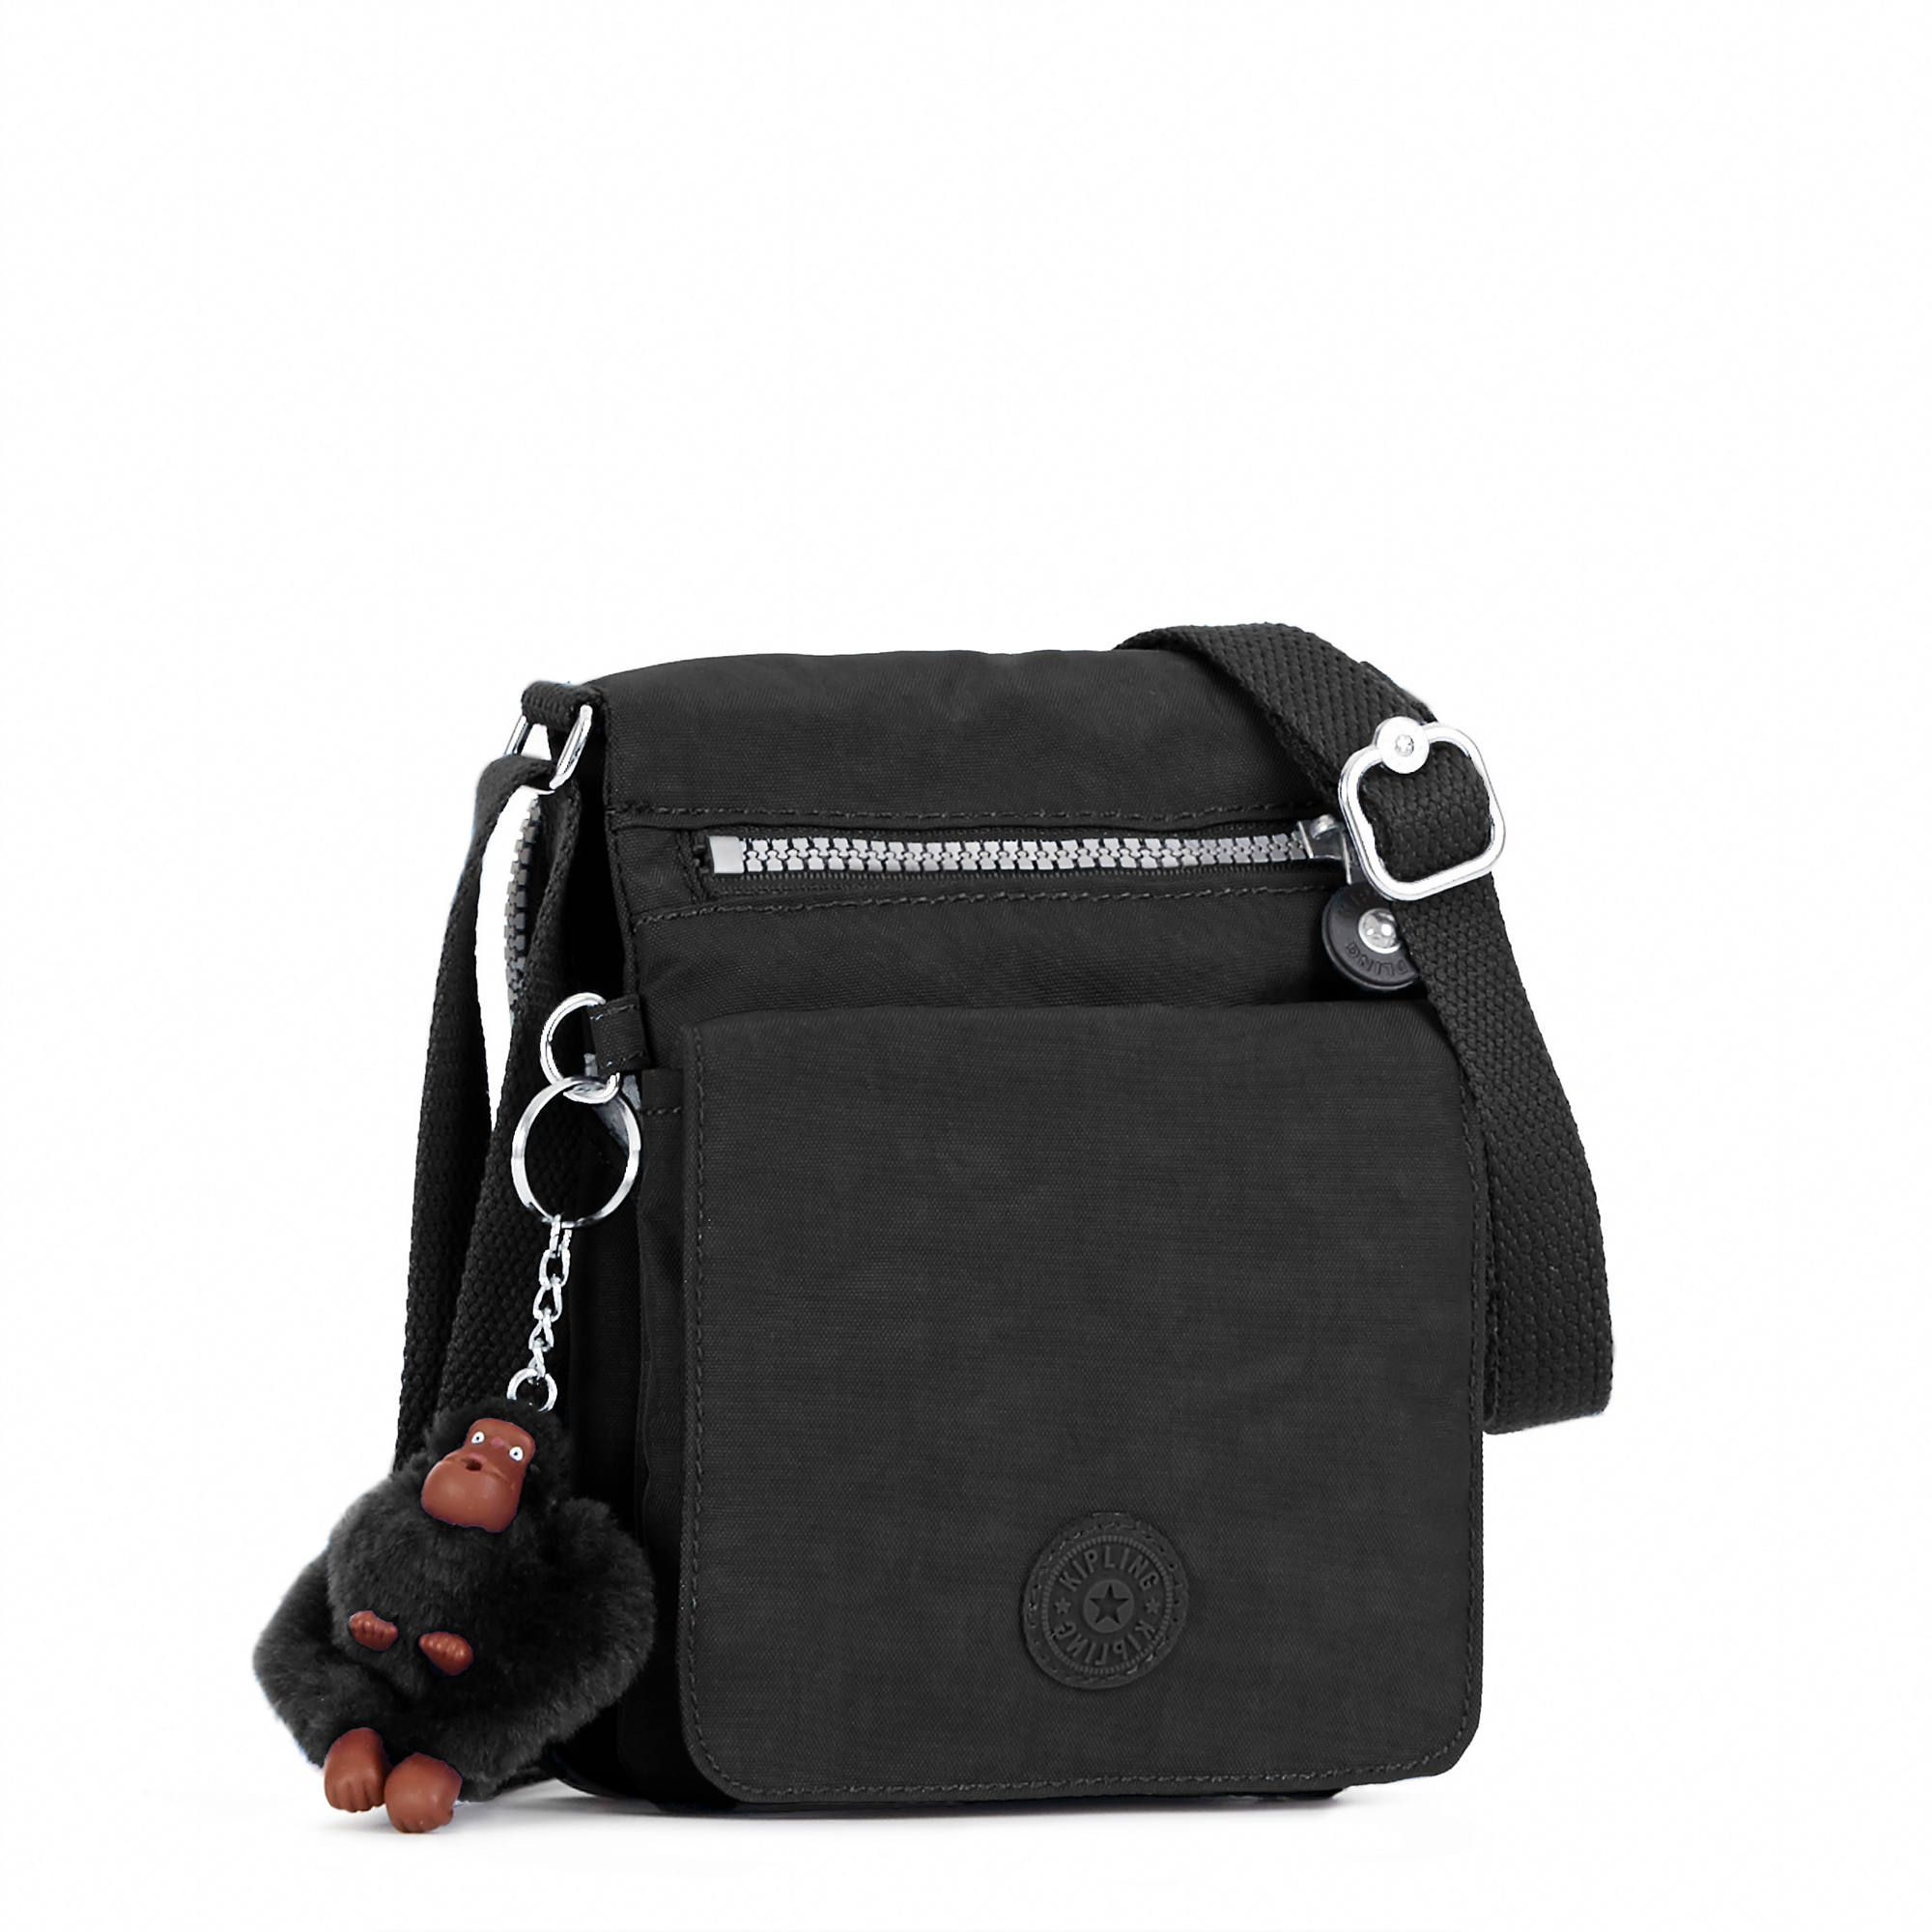 Kipling Women's Sebastian Crossbody Bag, Black Tonal, One Size US:  Handbags: Amazon.com